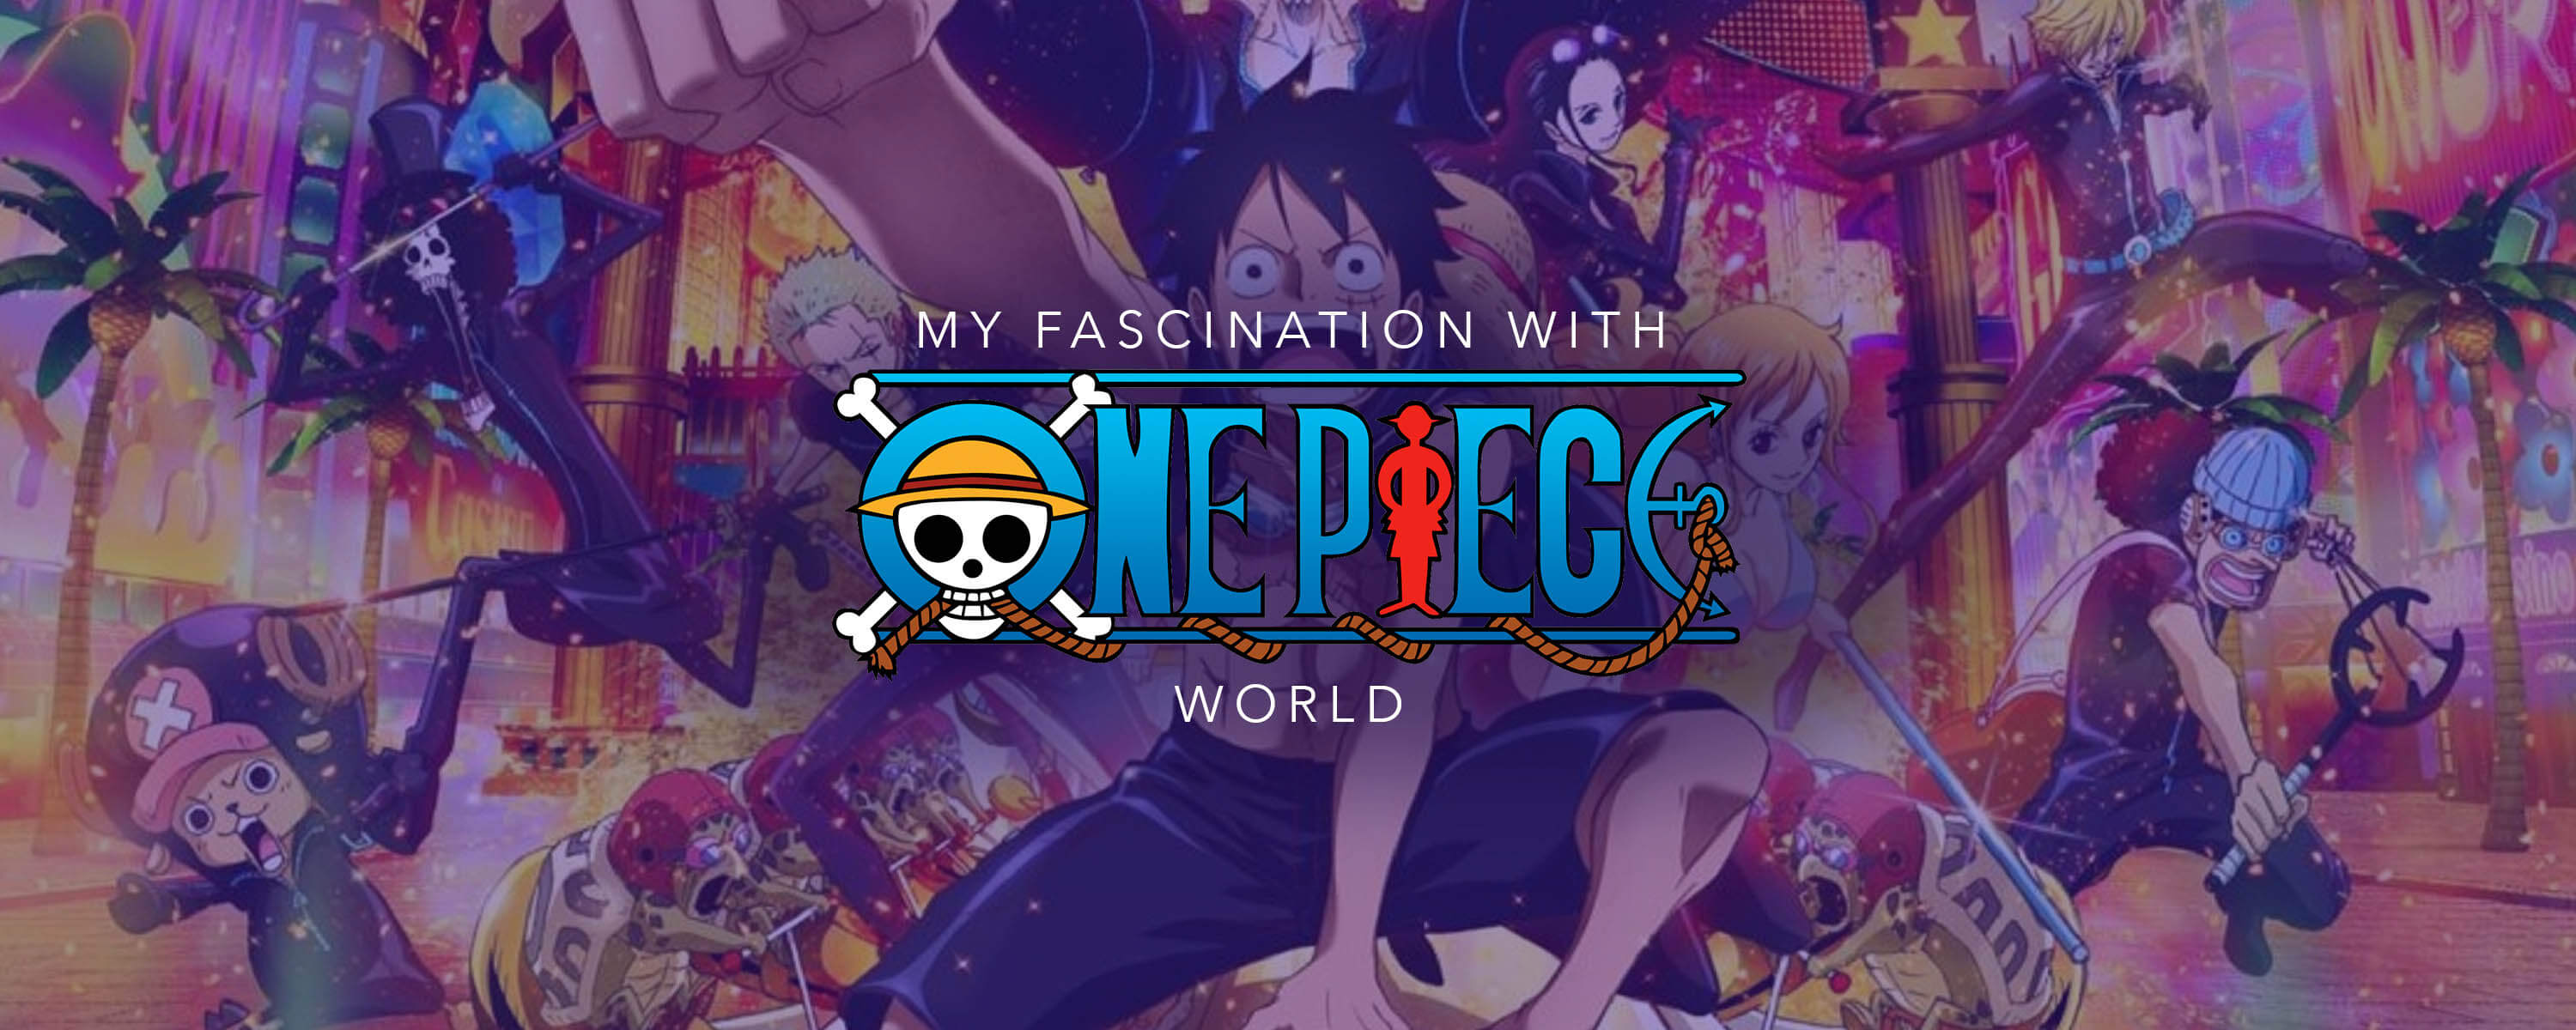 My Fascination With One Piece S World Yatta Tachi